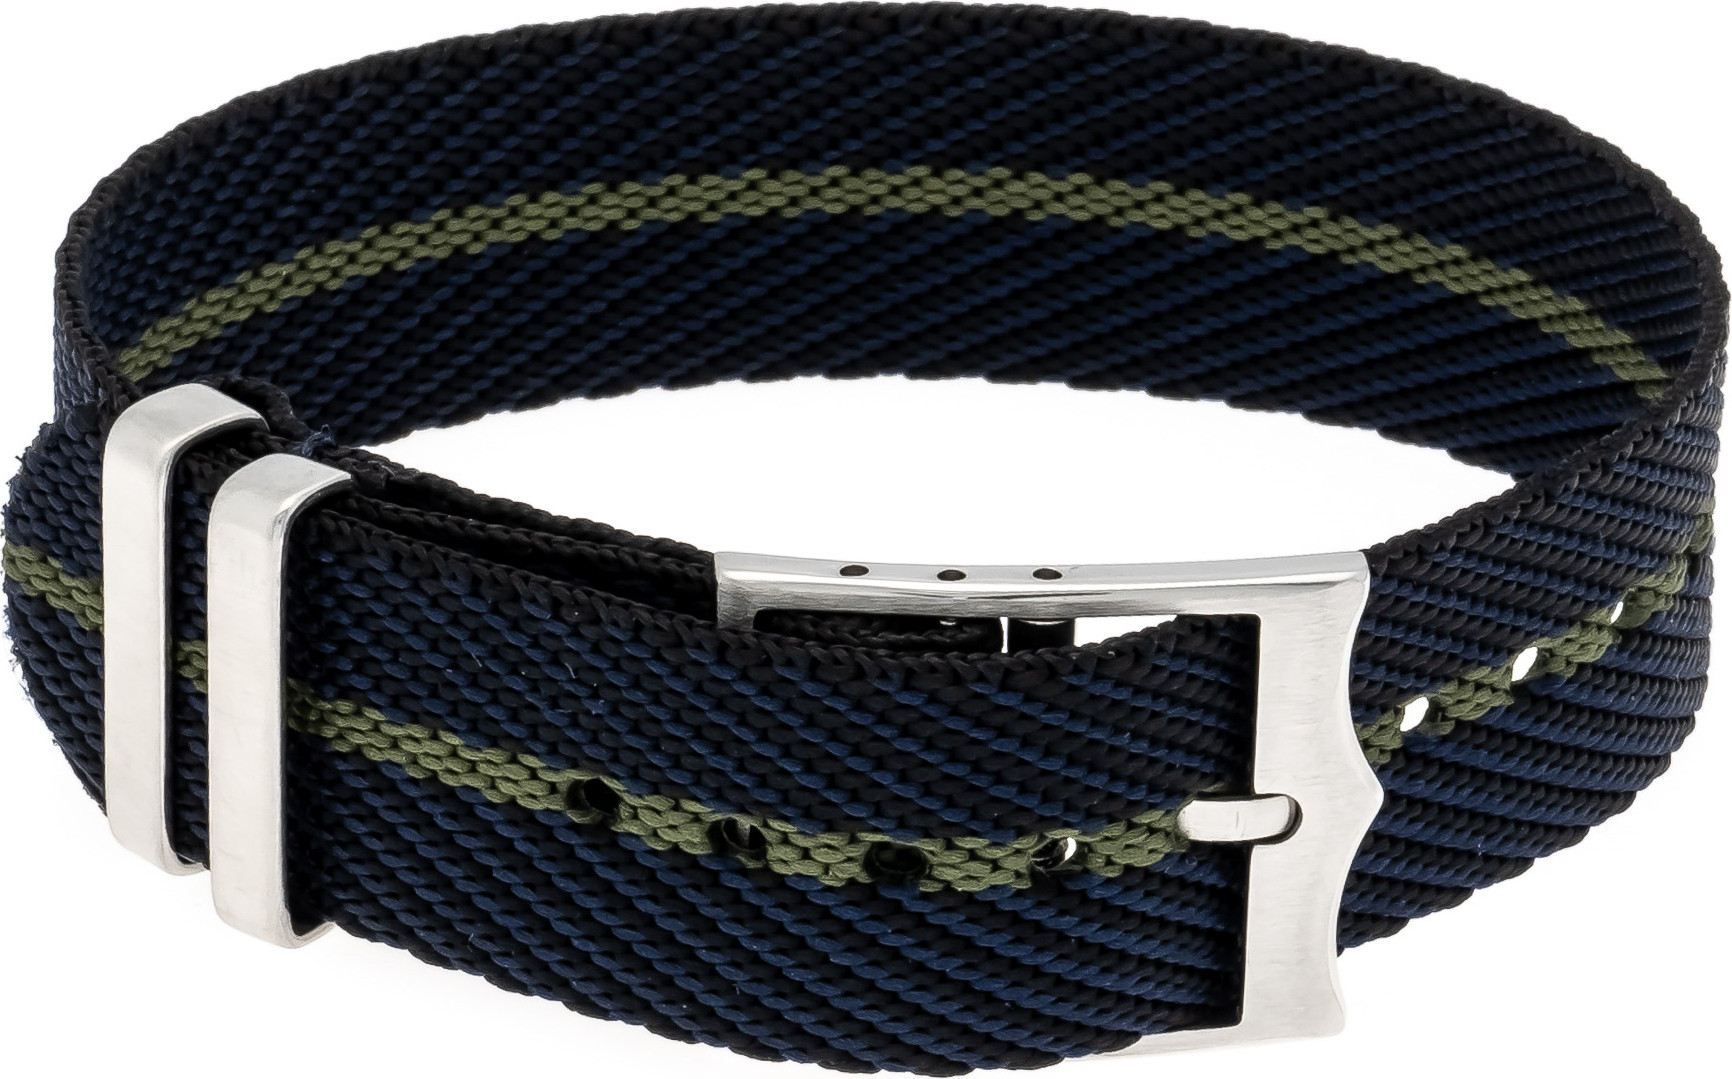  Nylon Watch strap nylon black-blue-green stripes 